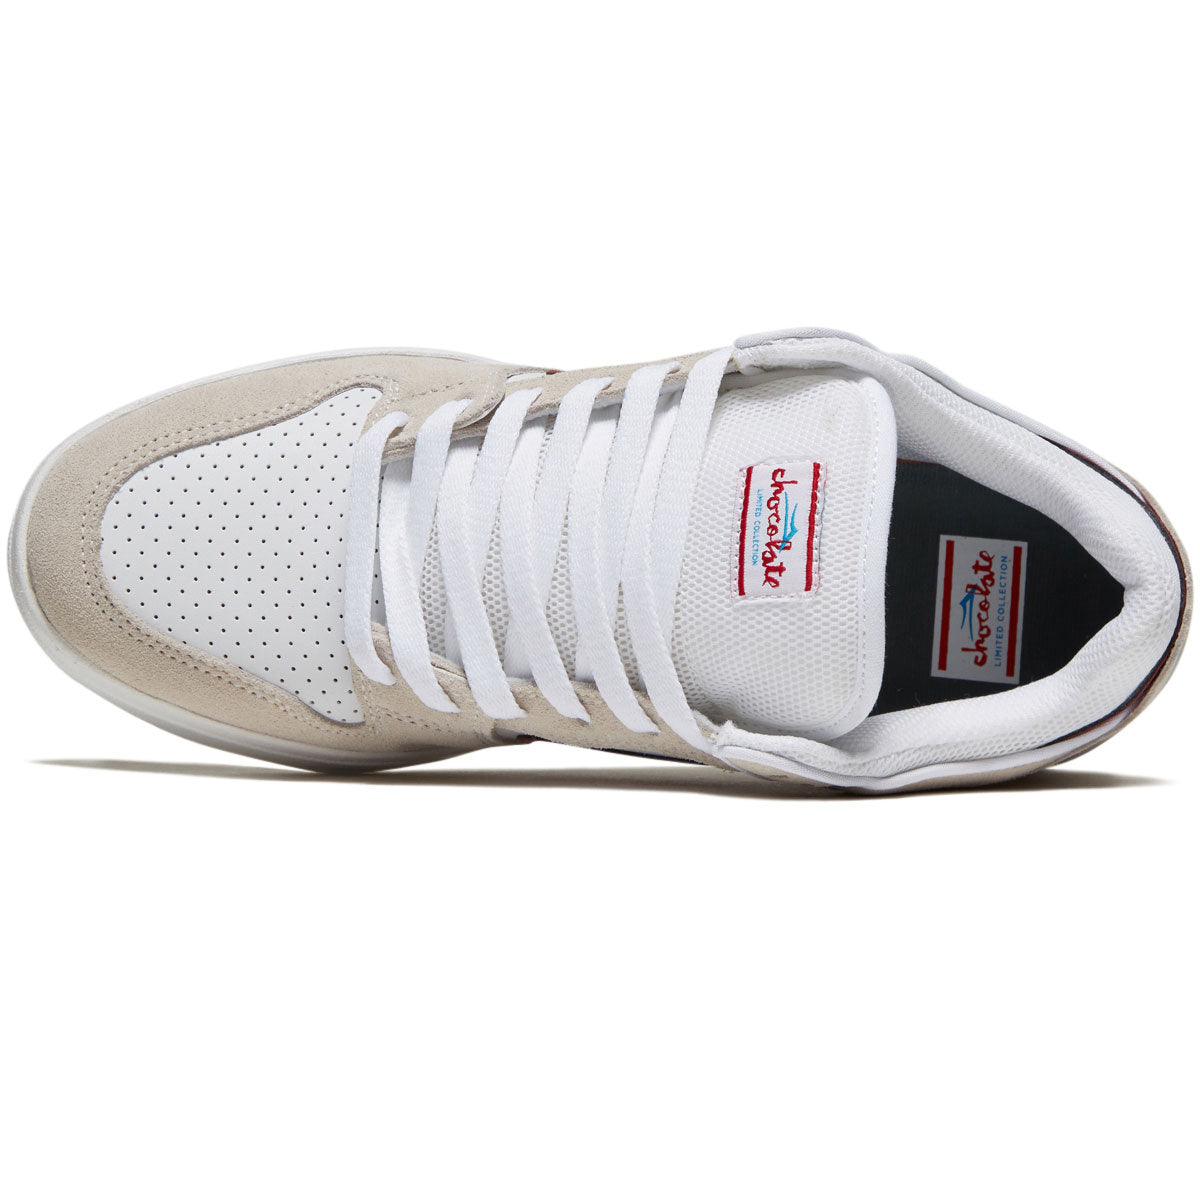 Lakai x Chocolate Telford Low Shoes - White/Red image 3